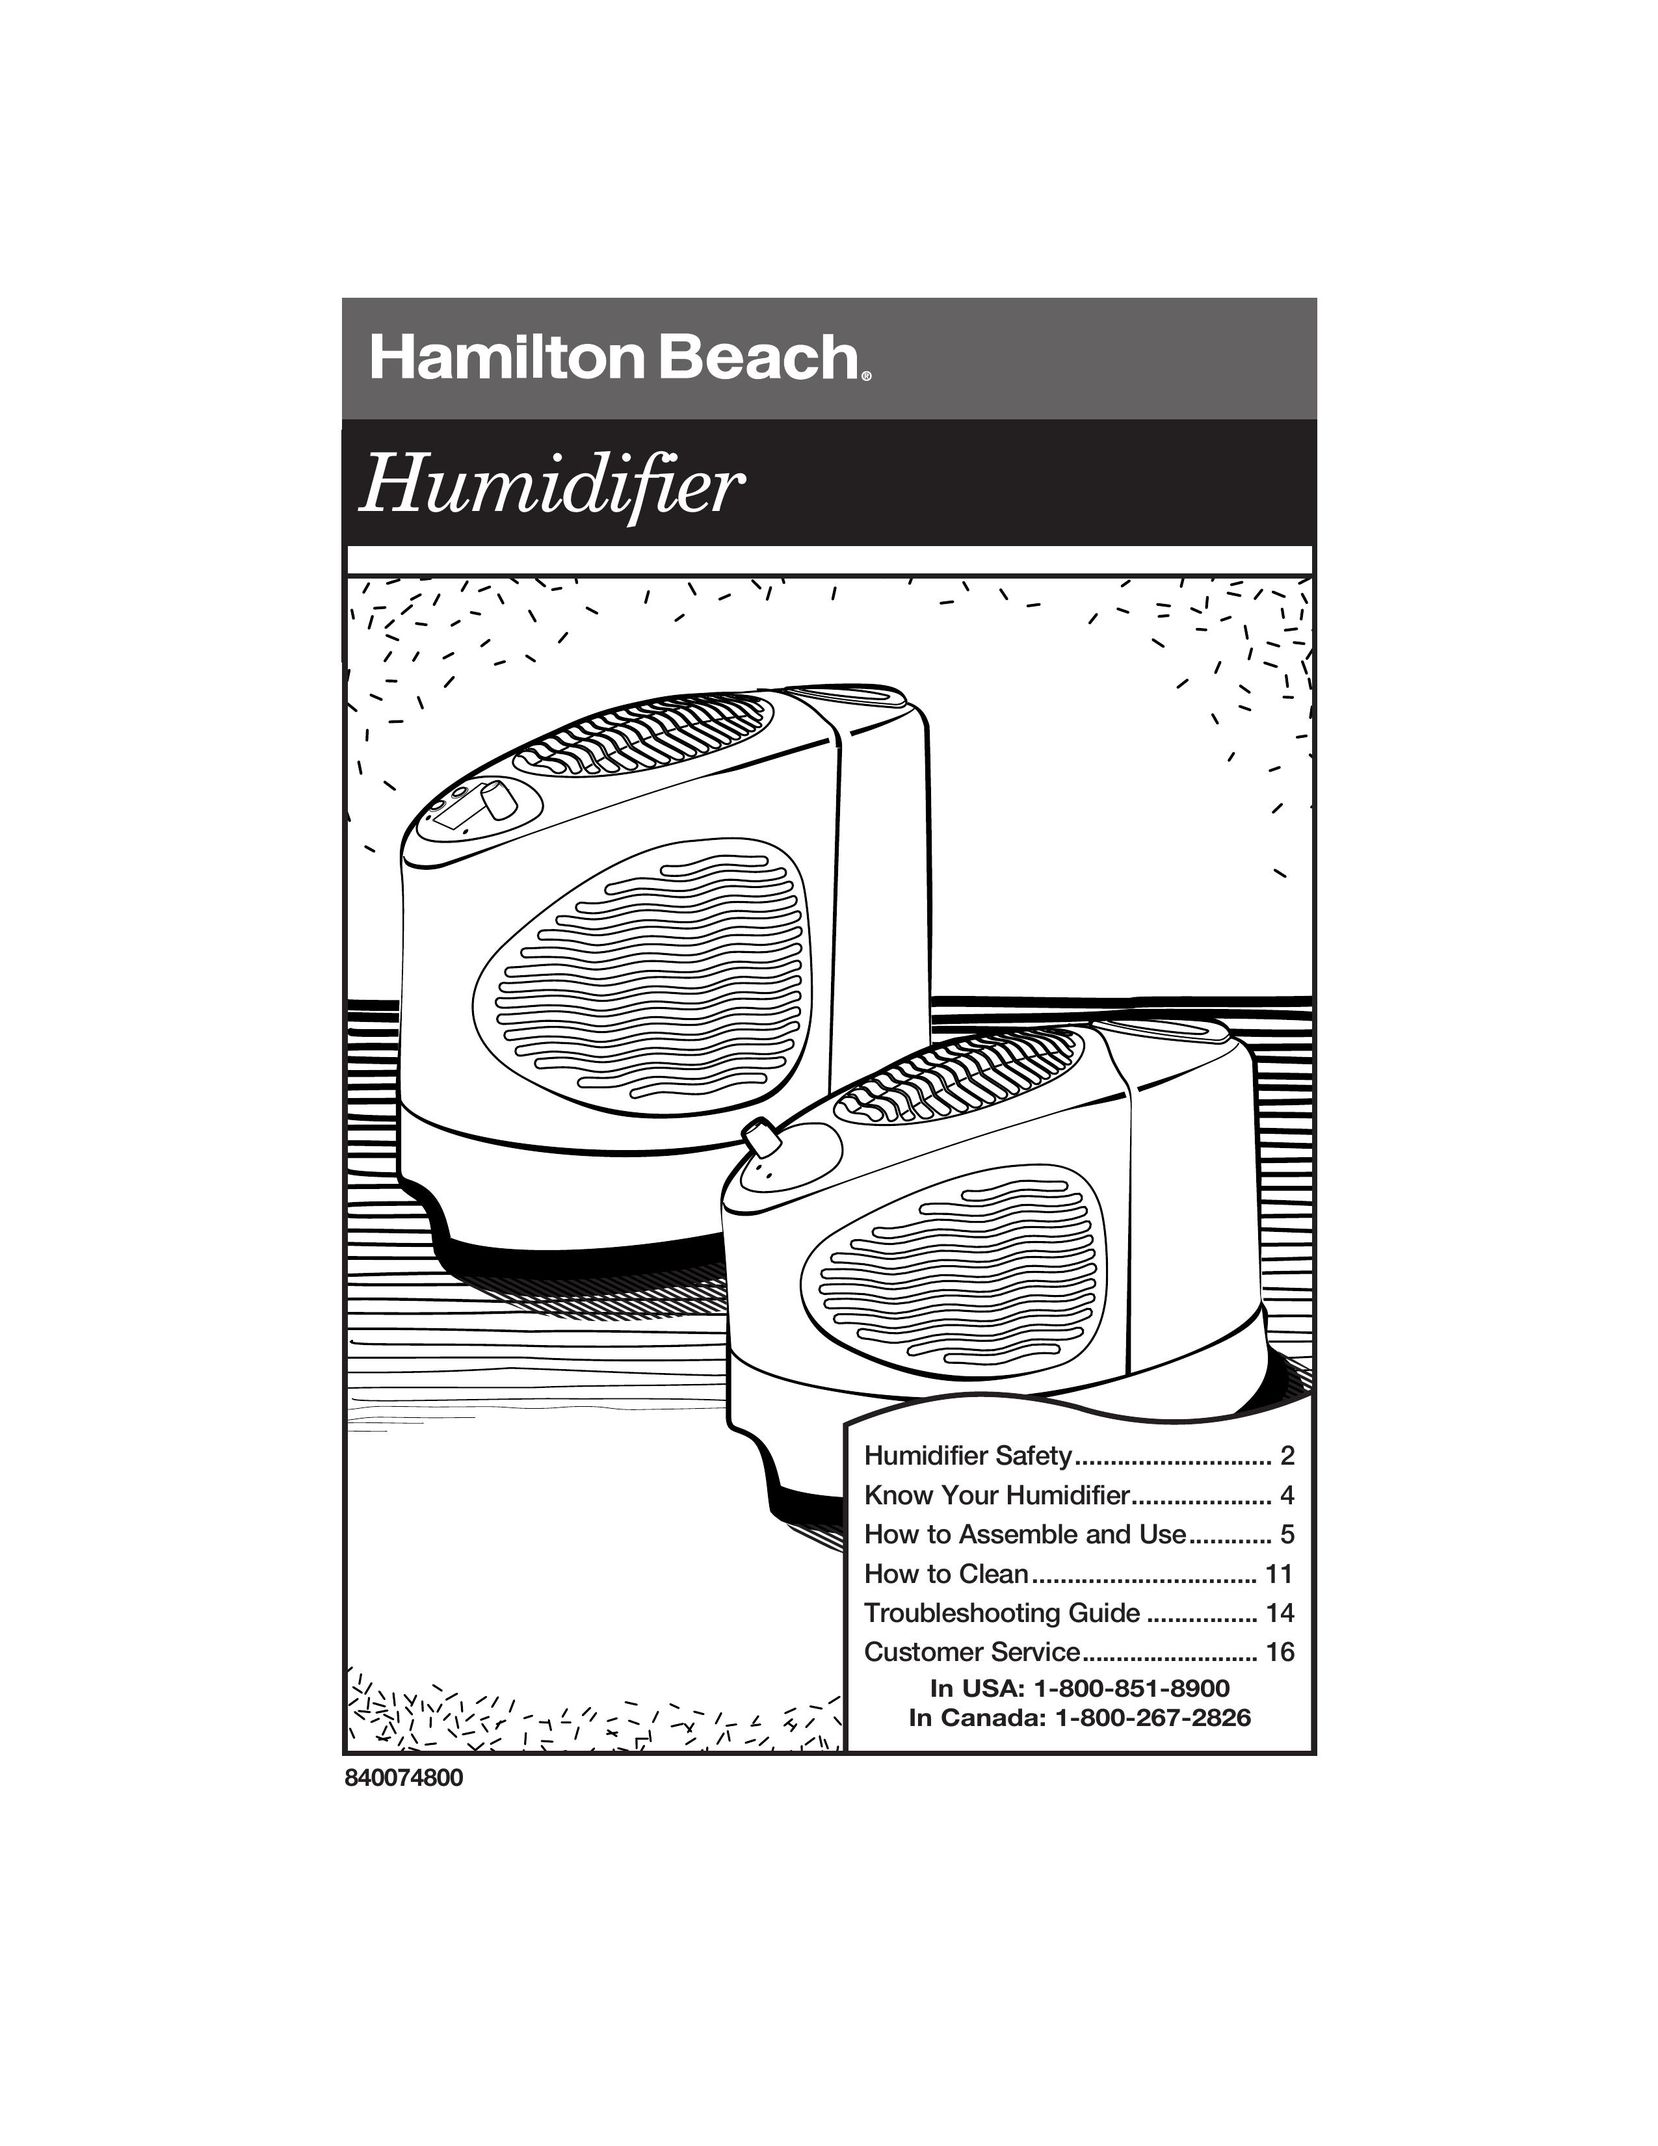 Hamilton Beach 840074800 Humidifier User Manual